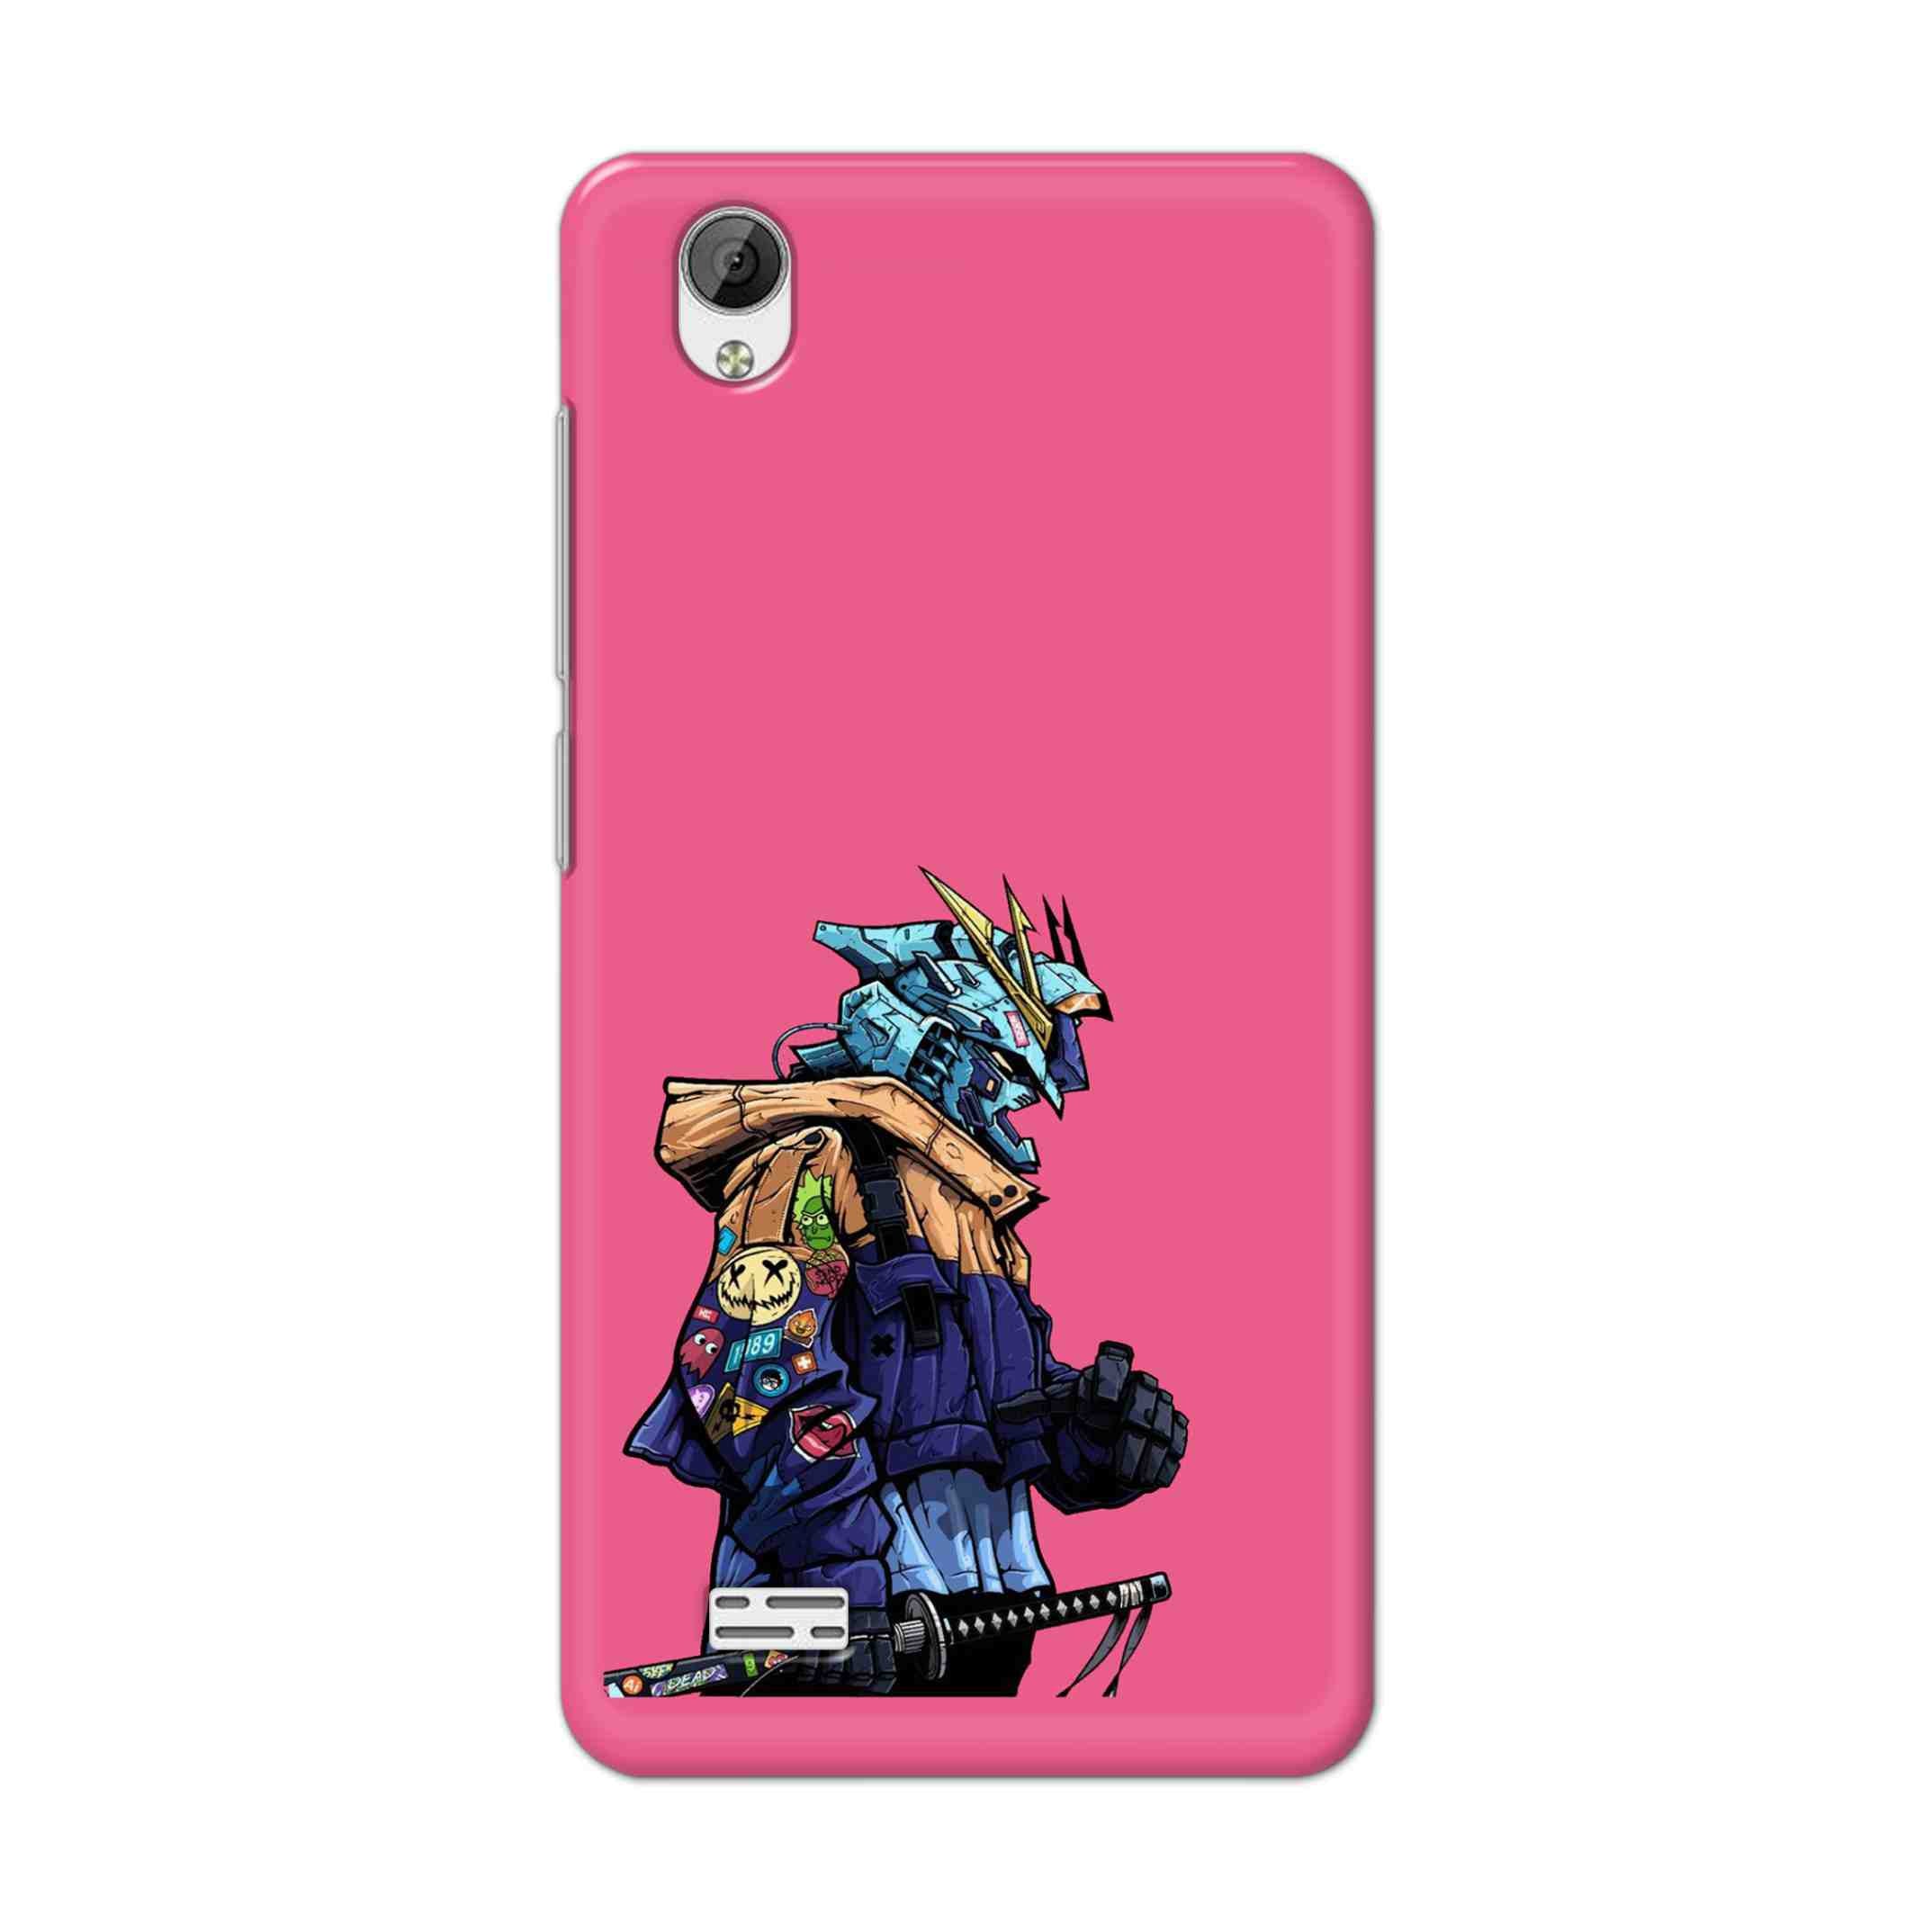 Buy Sword Man Hard Back Mobile Phone Case Cover For Vivo Y31 Online